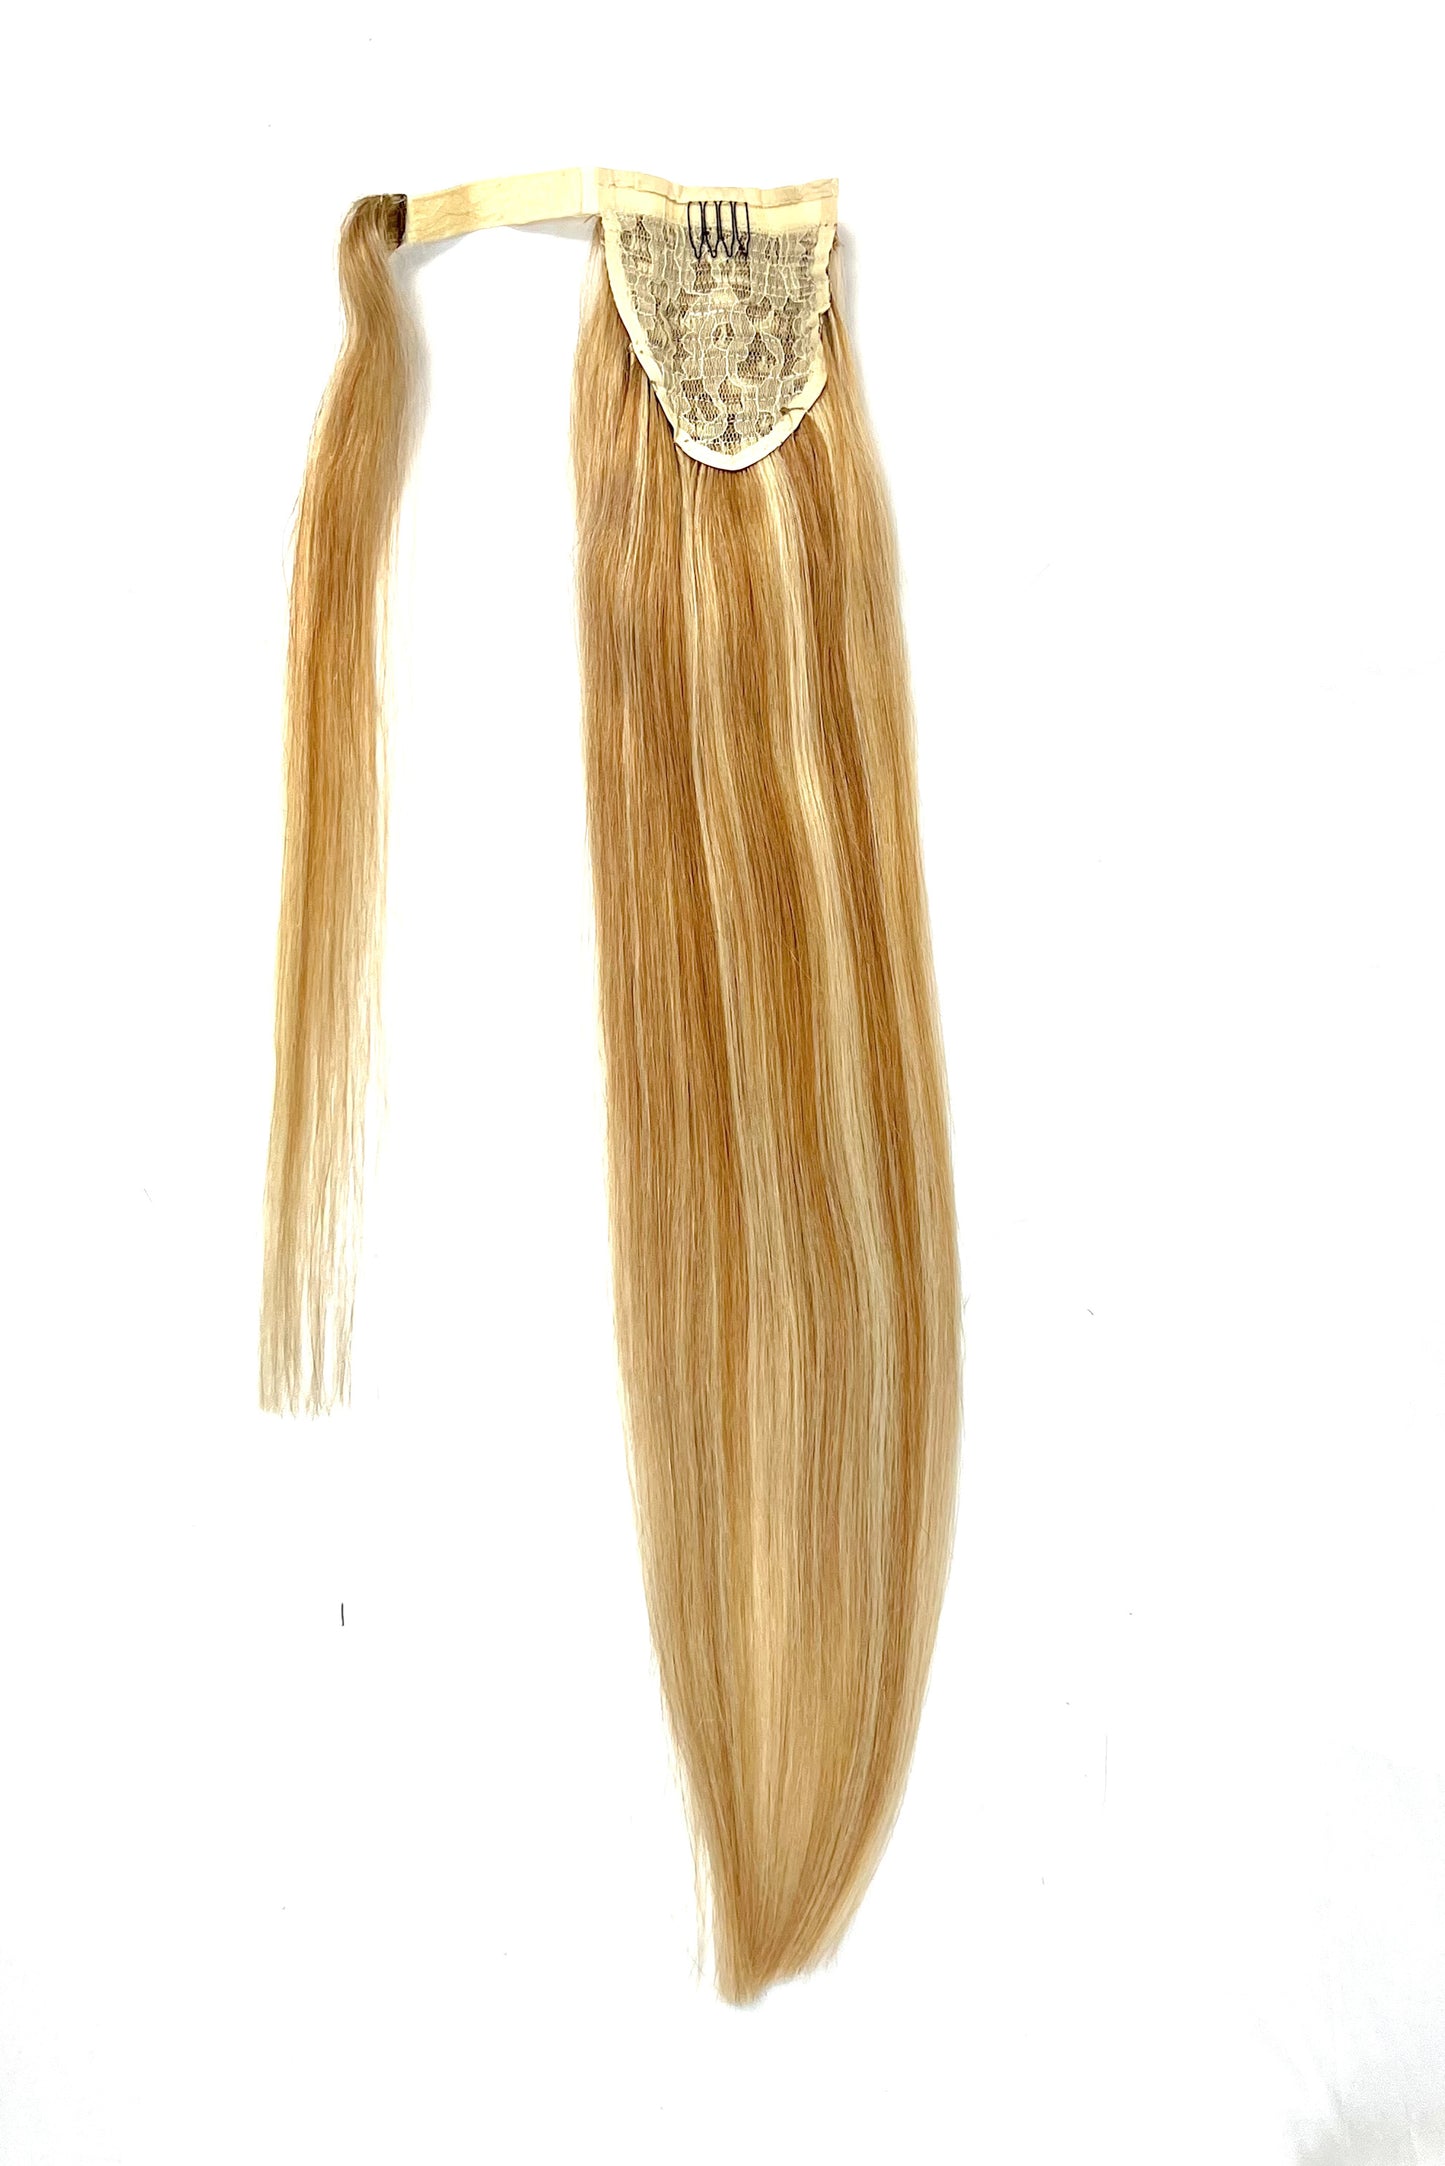 VIP PONYTAIL / Silky 24" (100 grams) 100% Human Hair - VIP Extensions